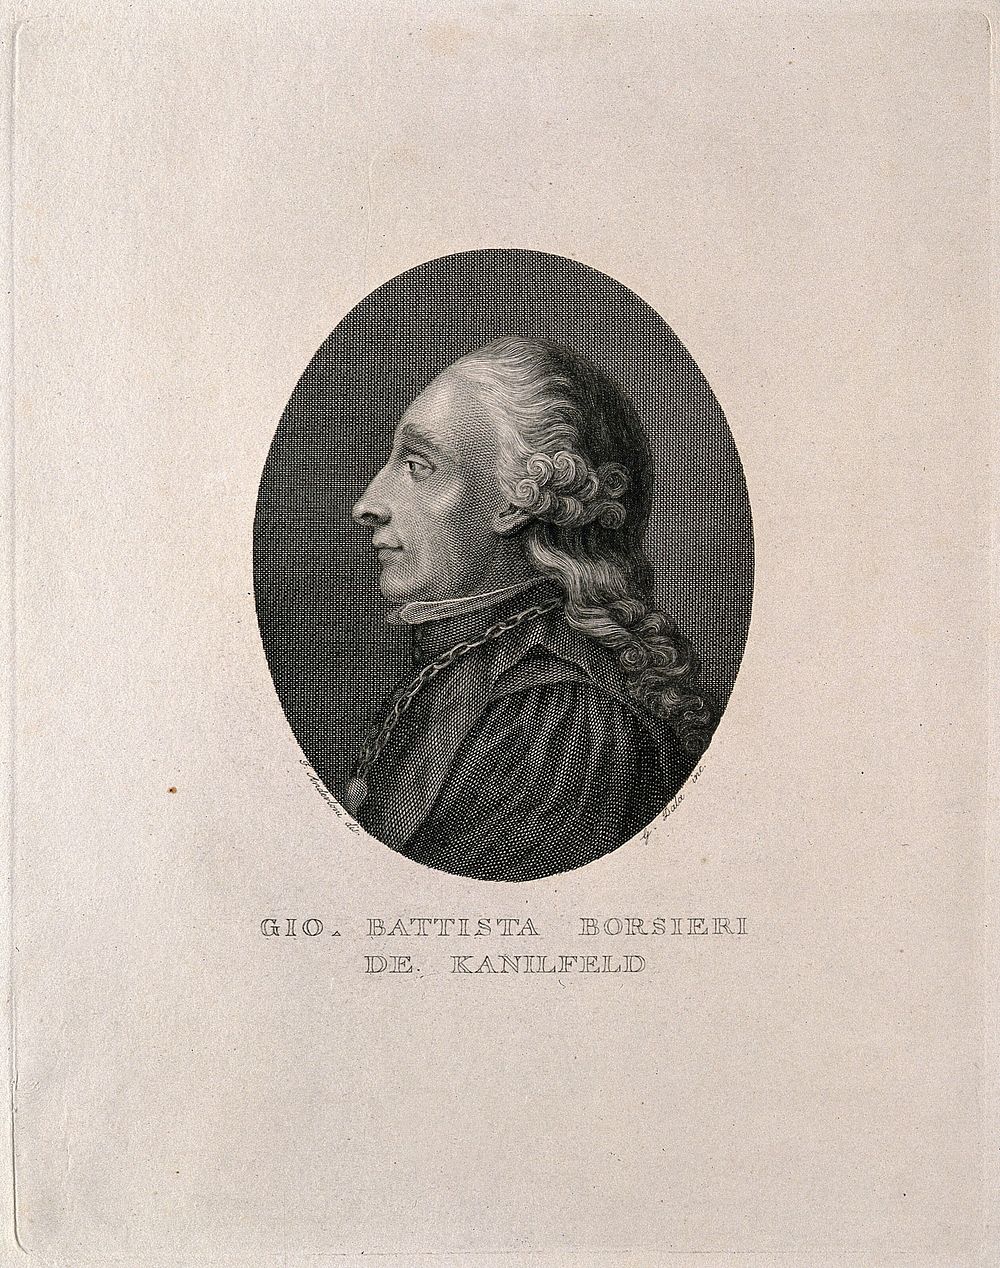 Giovanni Battista Borsieri di Kanifeld. Line engraving by G. Dala after F. Anderloni.